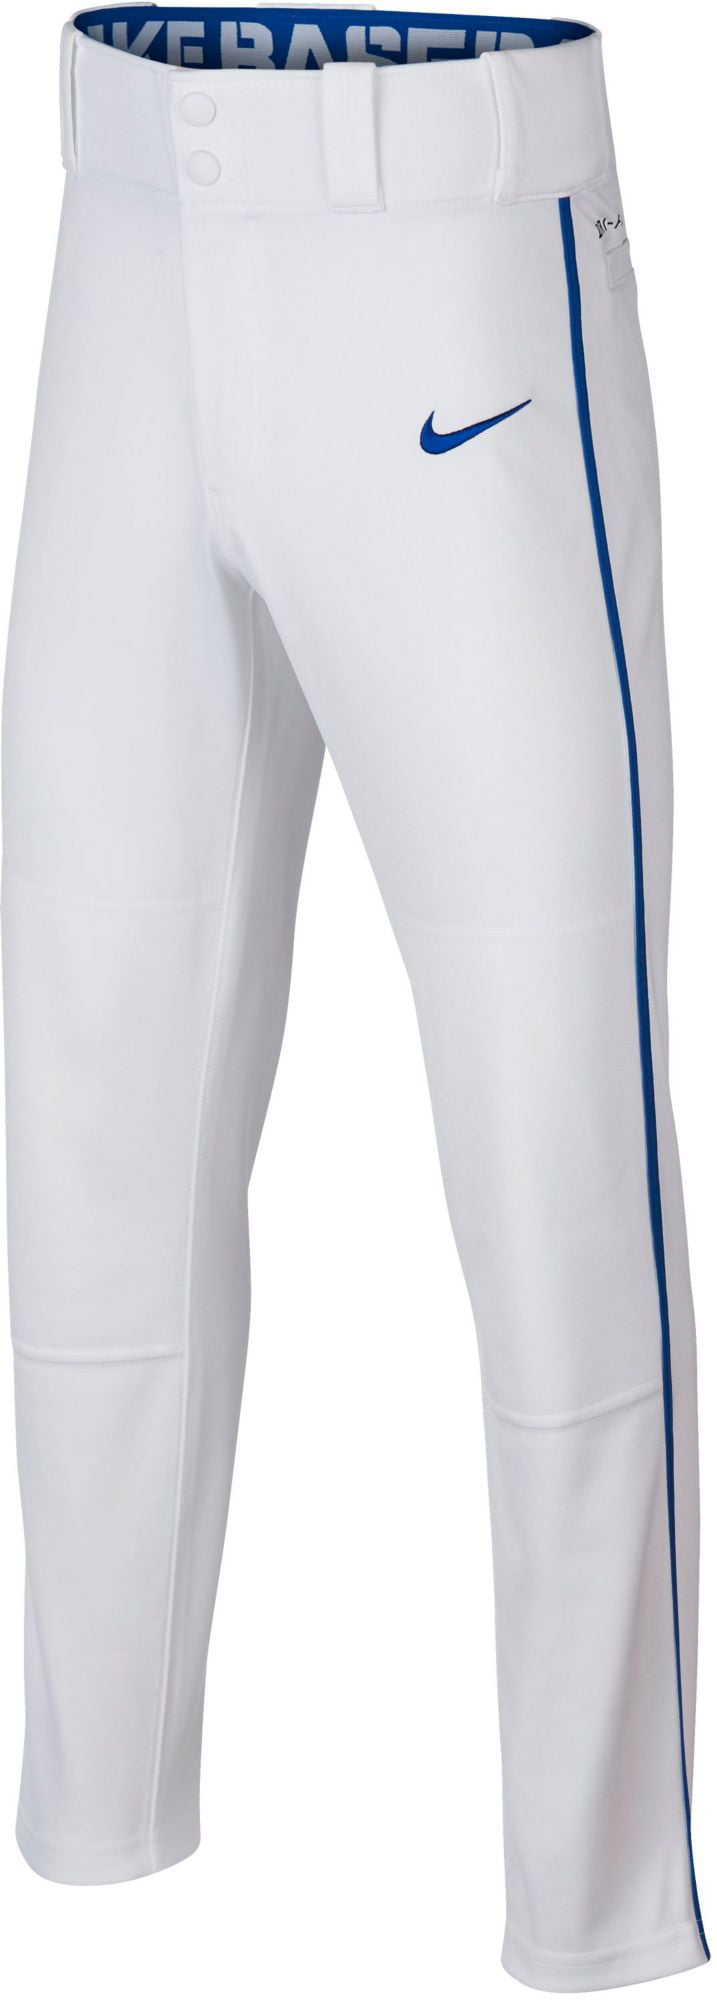 Nike Boys' Swoosh Piped Dri-FIT Baseball Pants - Walmart.com - Walmart.com